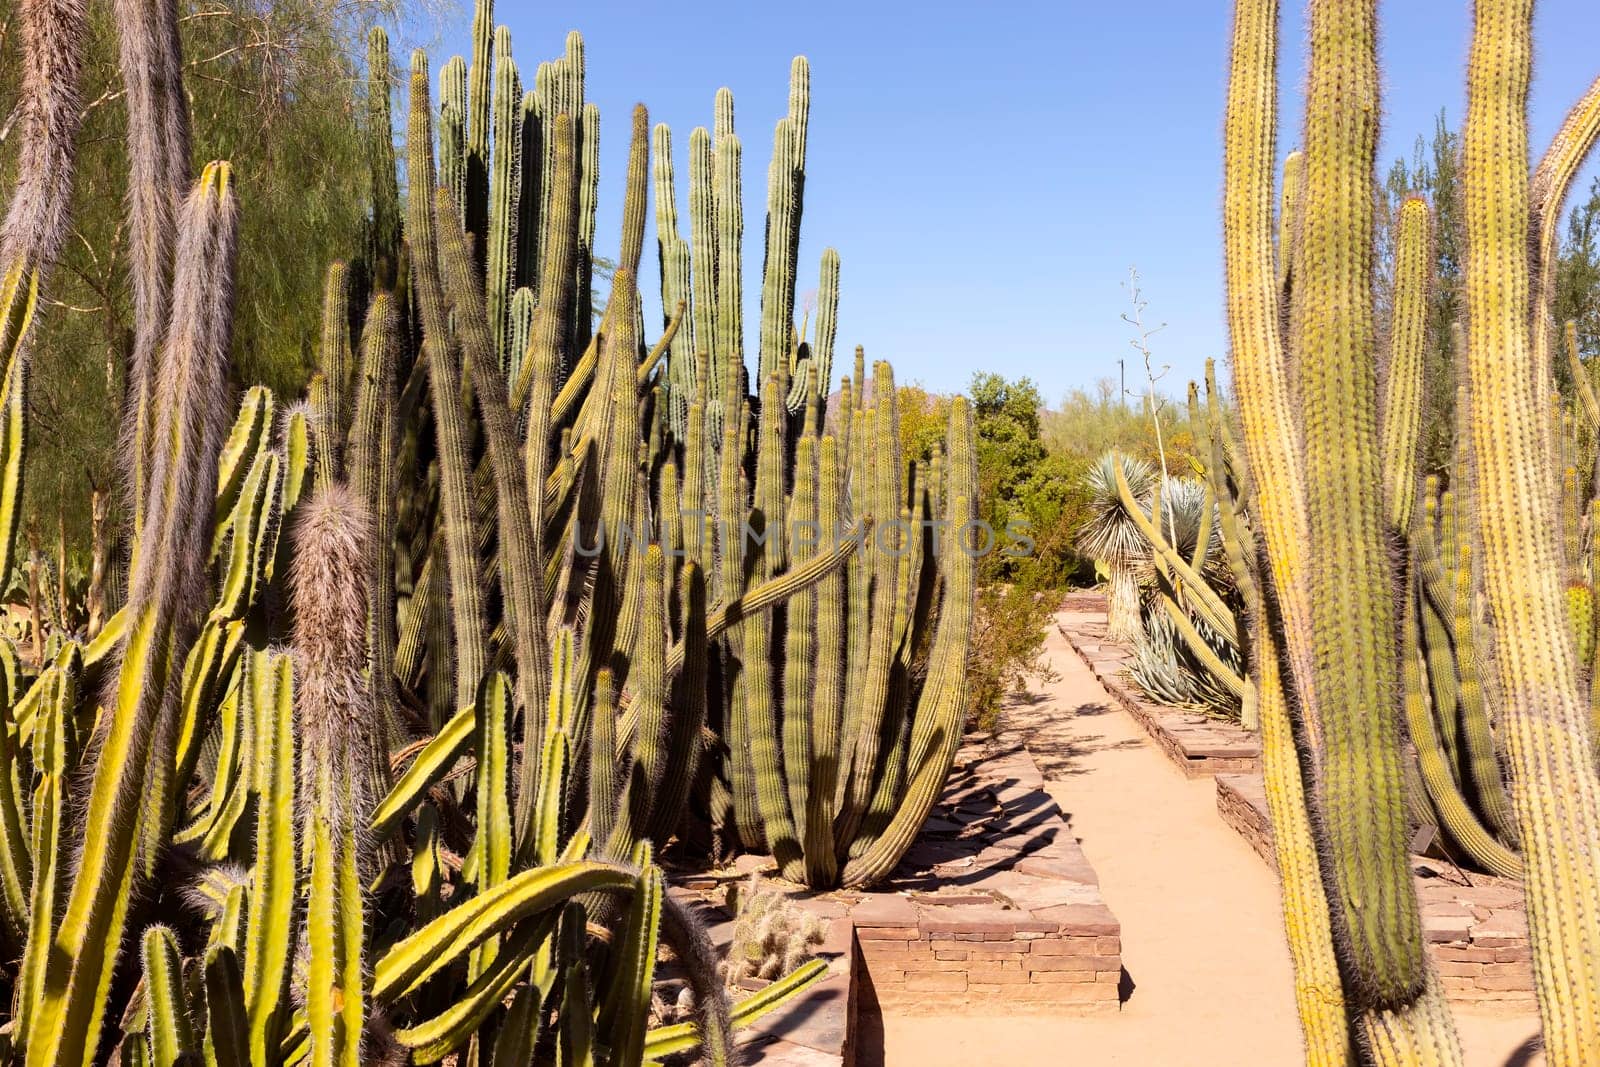 Giant Saguaro Cactus in Phoenix, Arizona. Greeting Post Card, Mockup. Happy Birthday or National Arizona Day on February 14 National Wildlife. Biosphere Reserve. Horizontal Plane. High quality photo